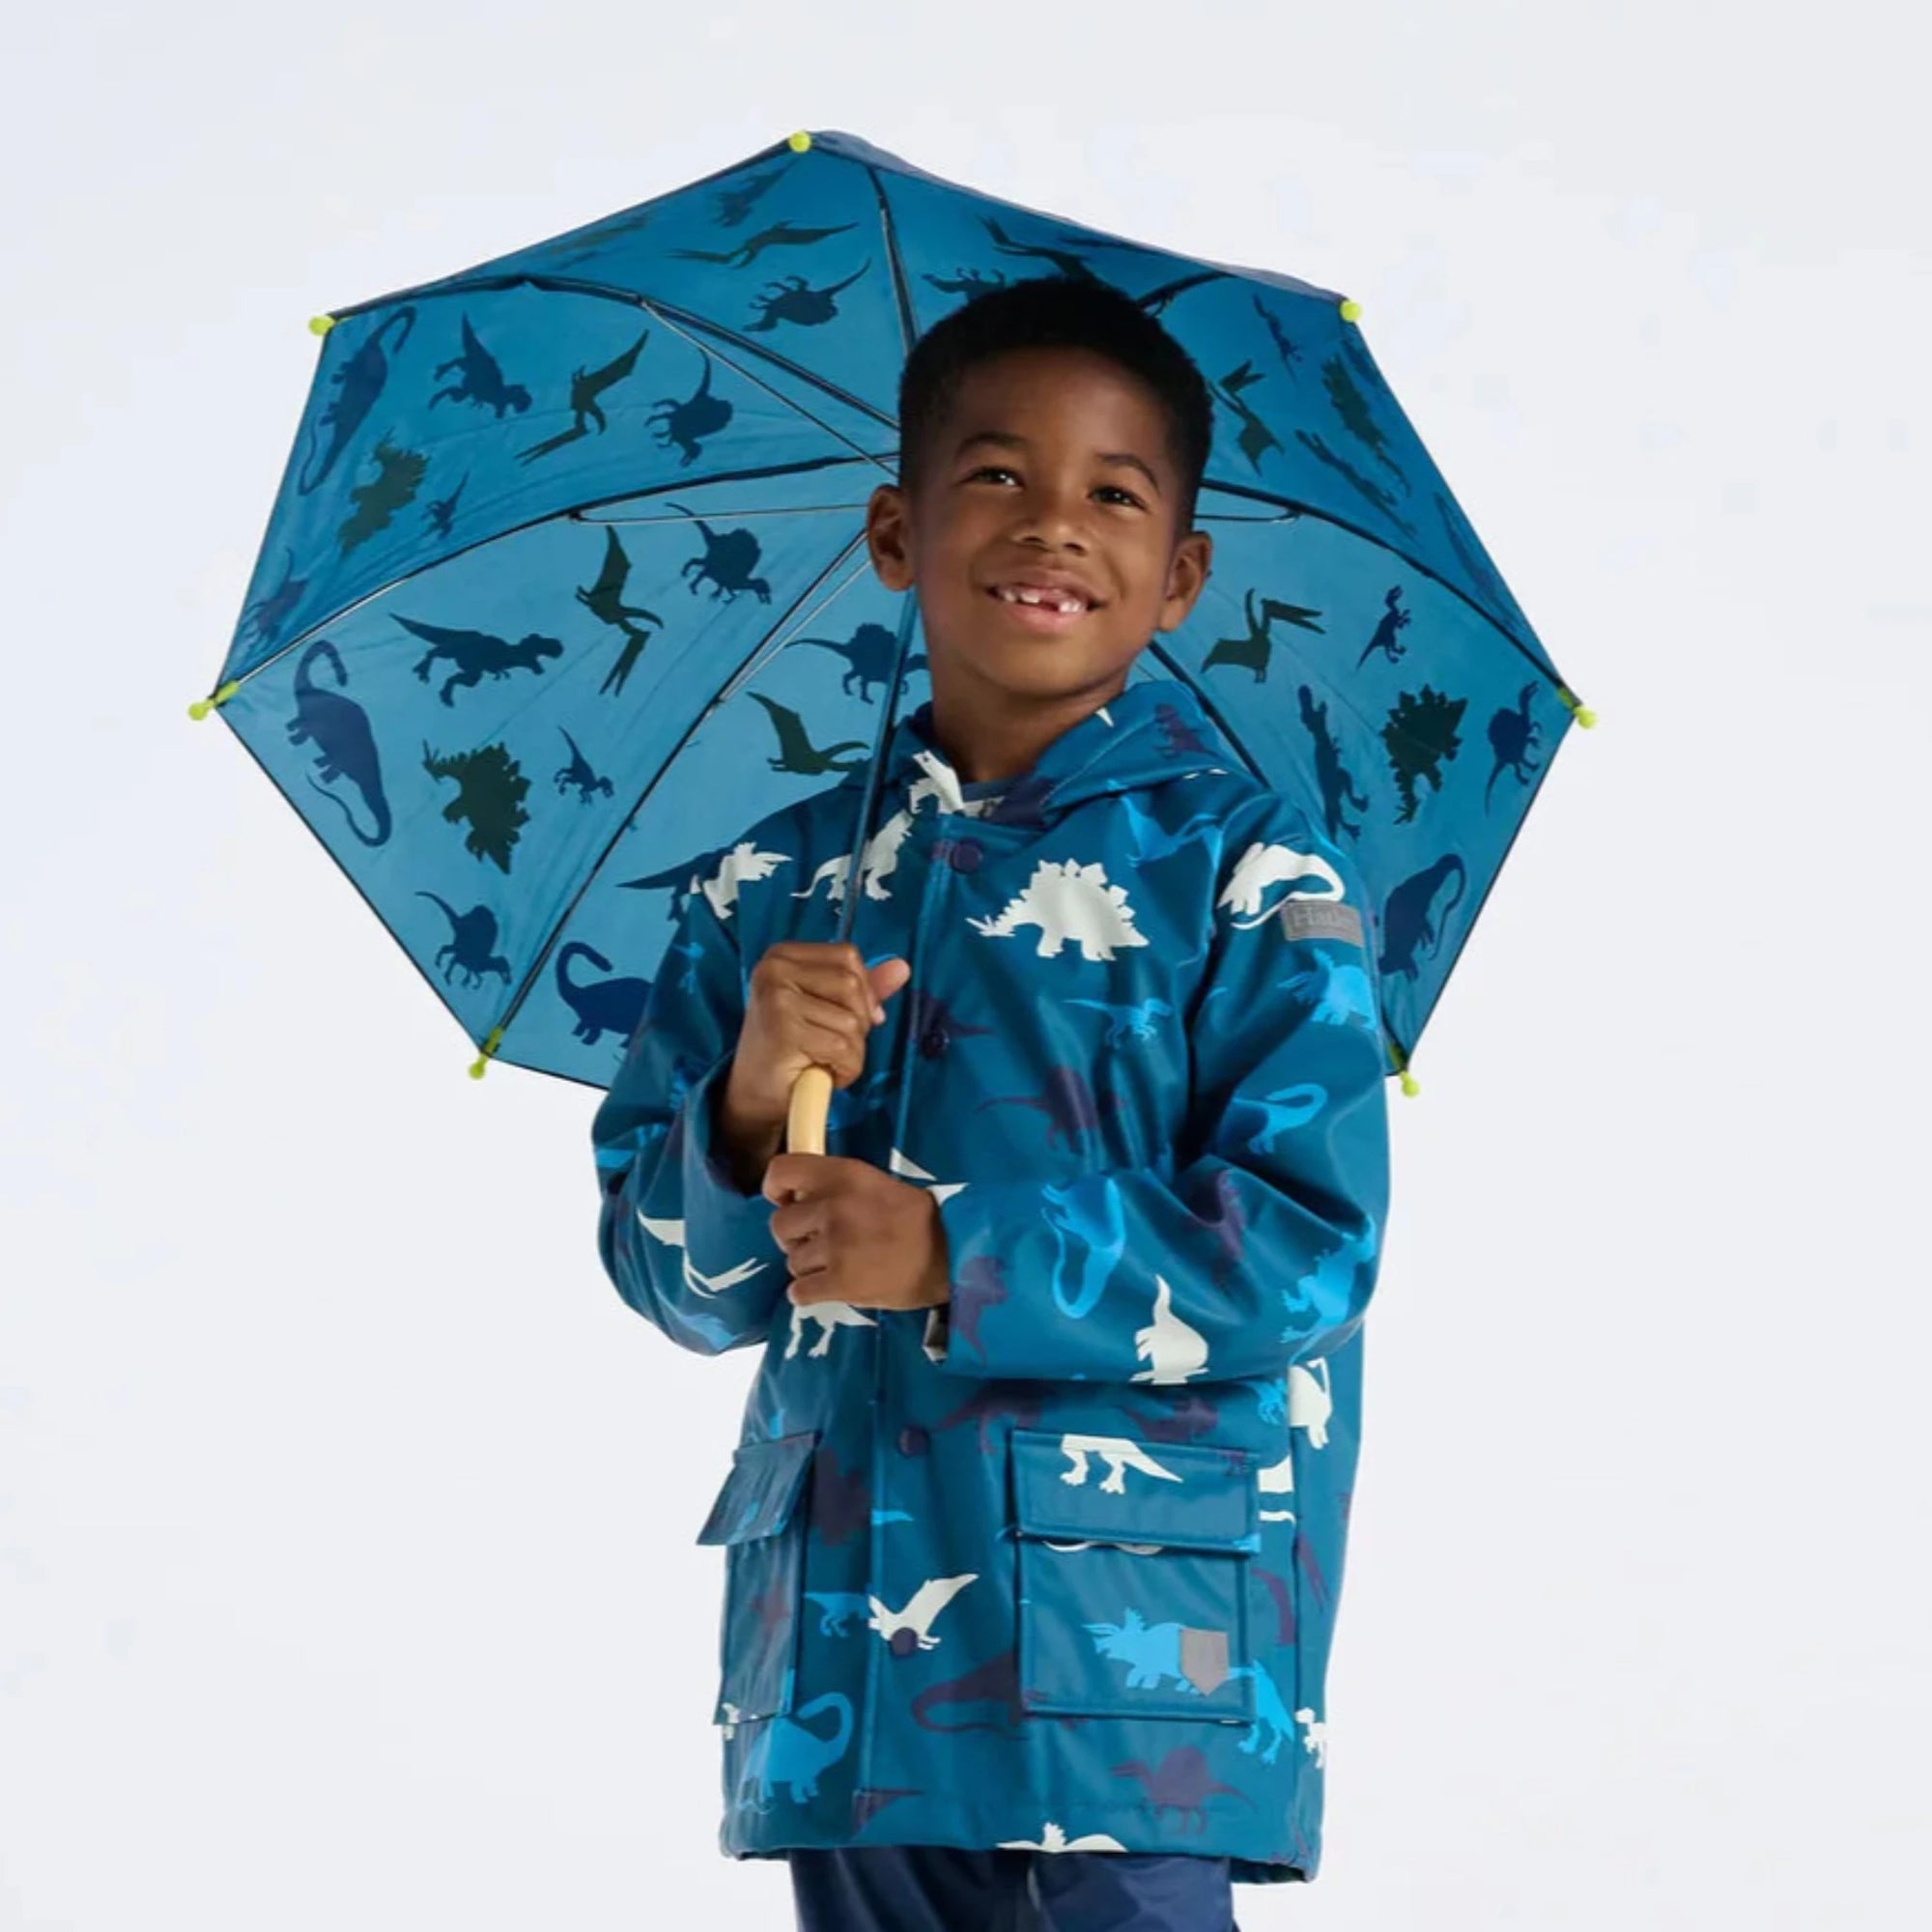 Hatley Real Dinos Colour Changing Umbrella - Moroccan Blue